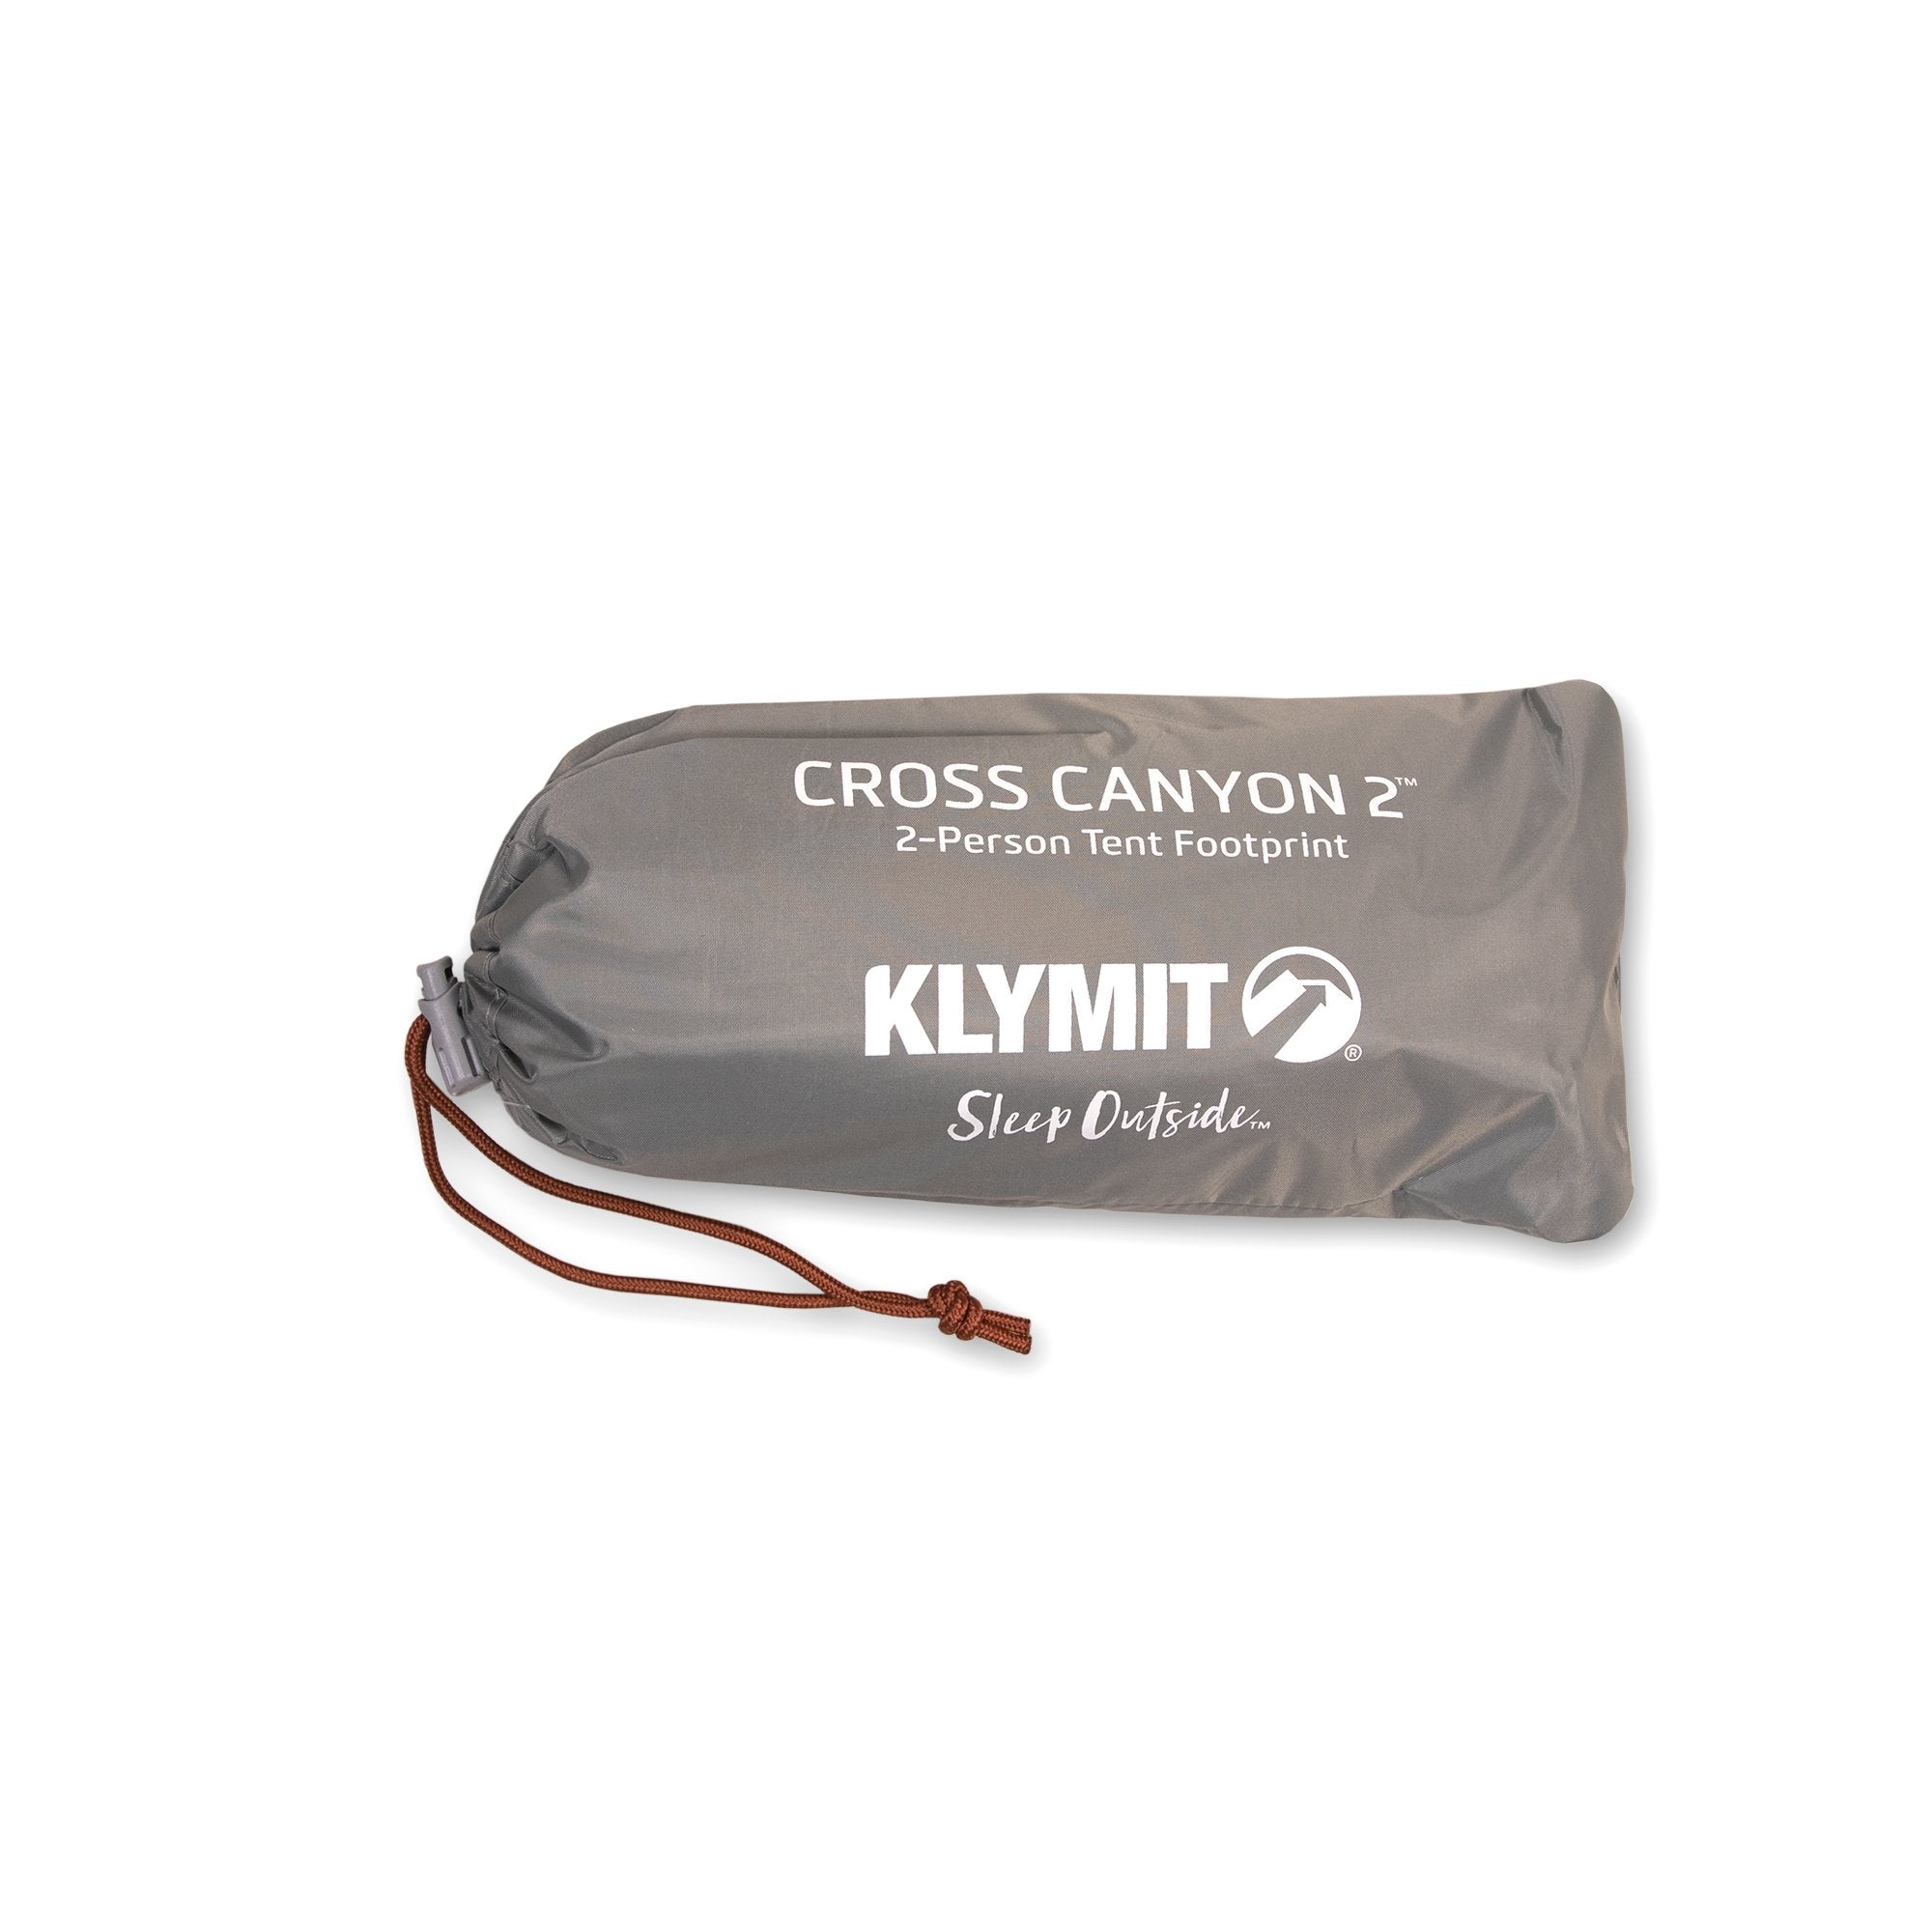 KLYMIT Cross Canyon Tent Footprint